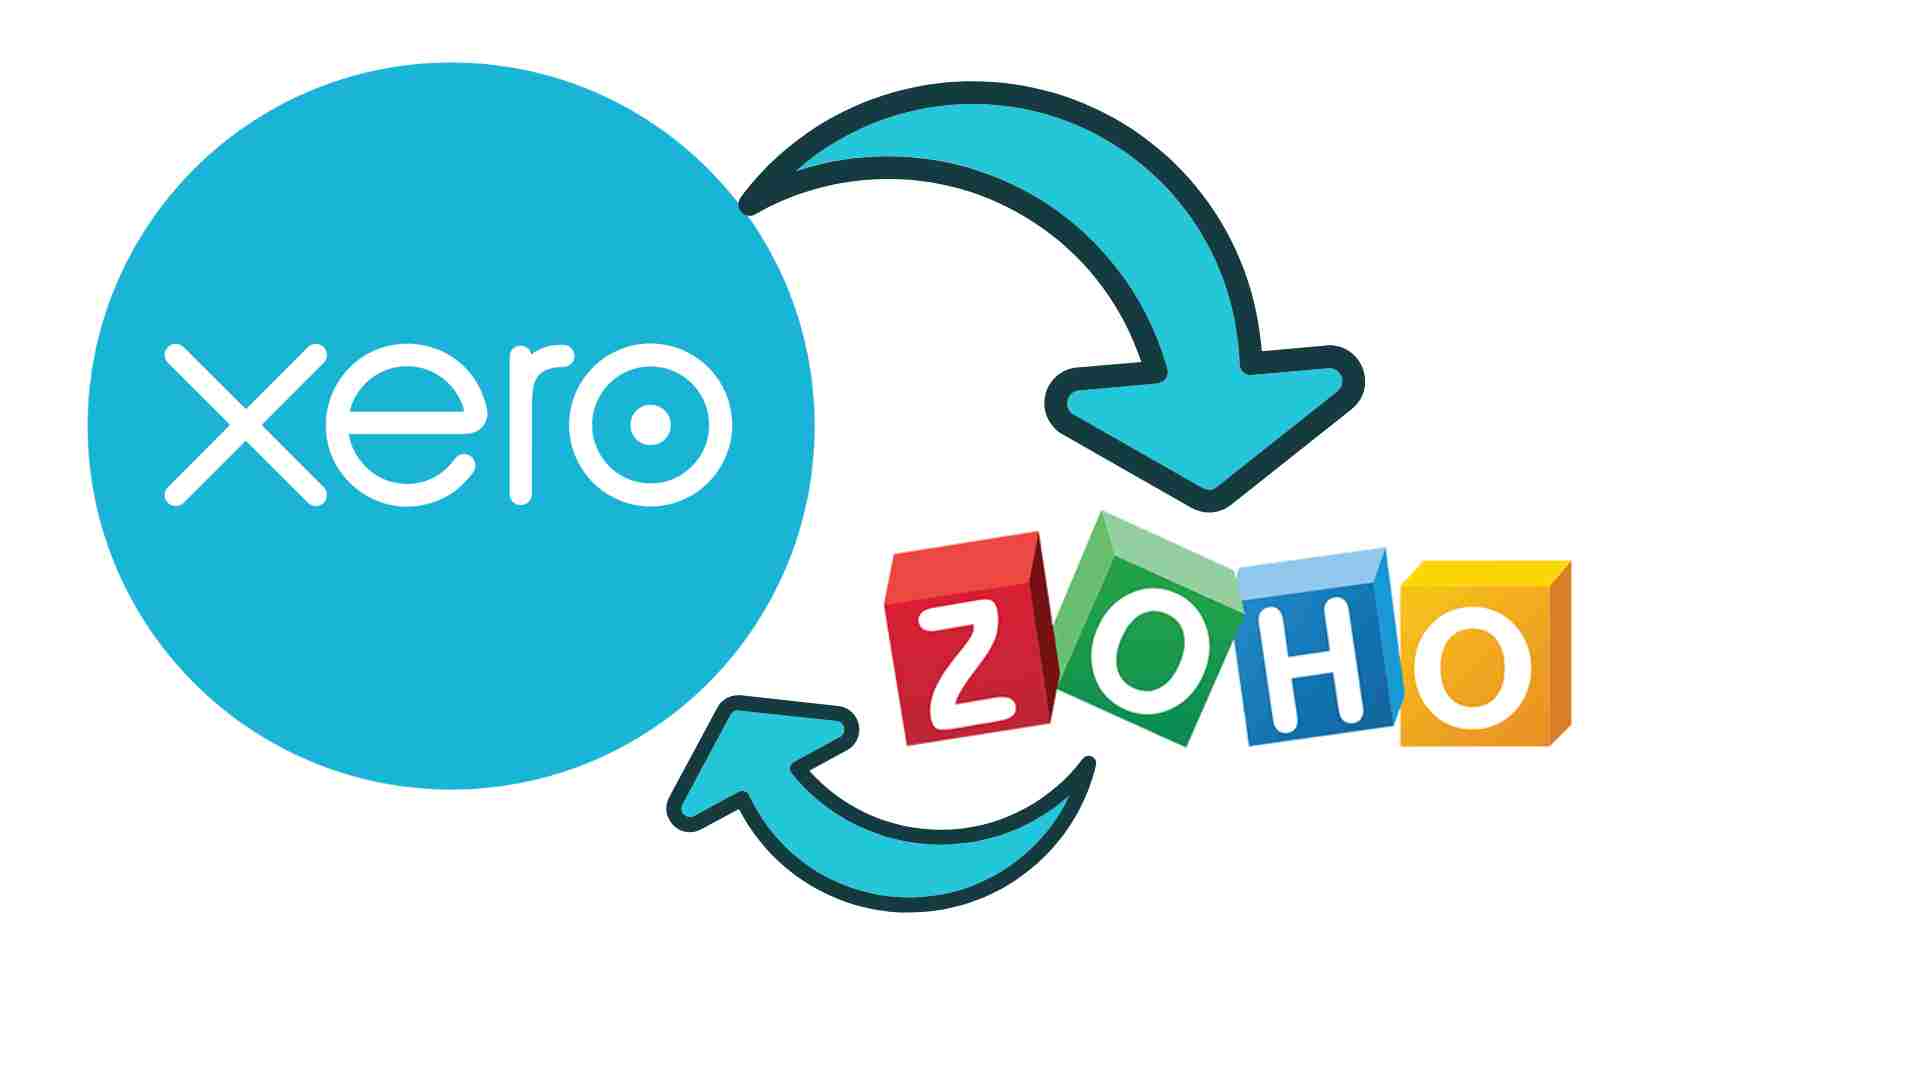 How to do Xero and Zoho Integration?